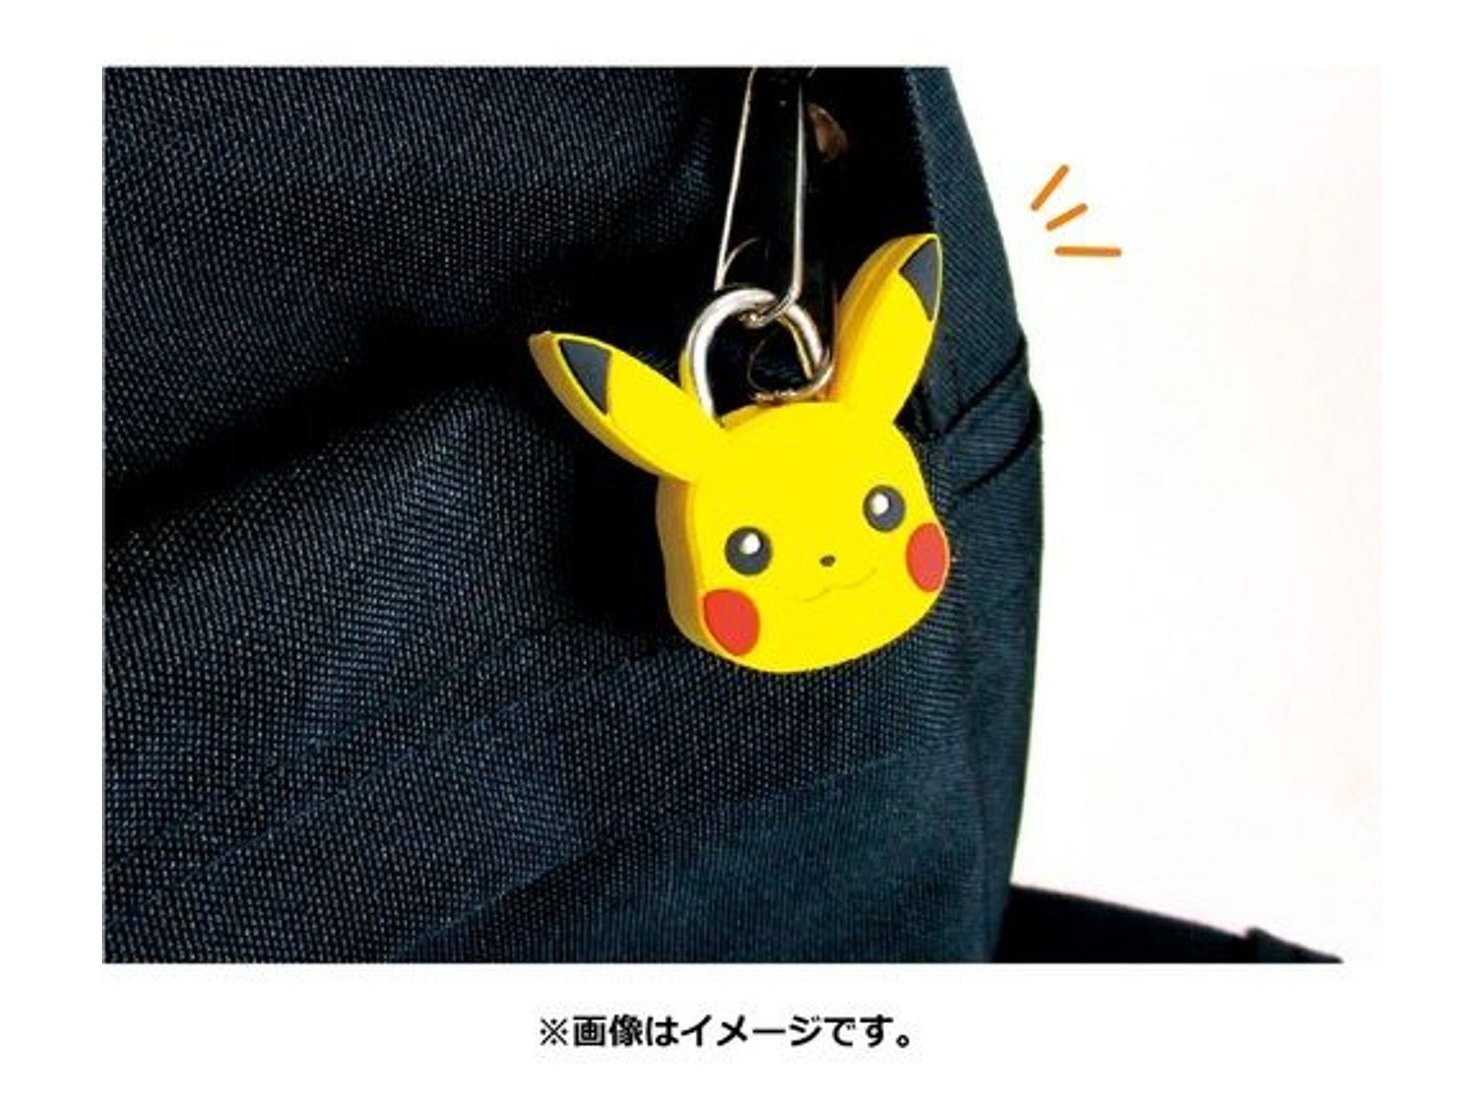 T's Factory Pokemon Pikachu Padlock Keychain